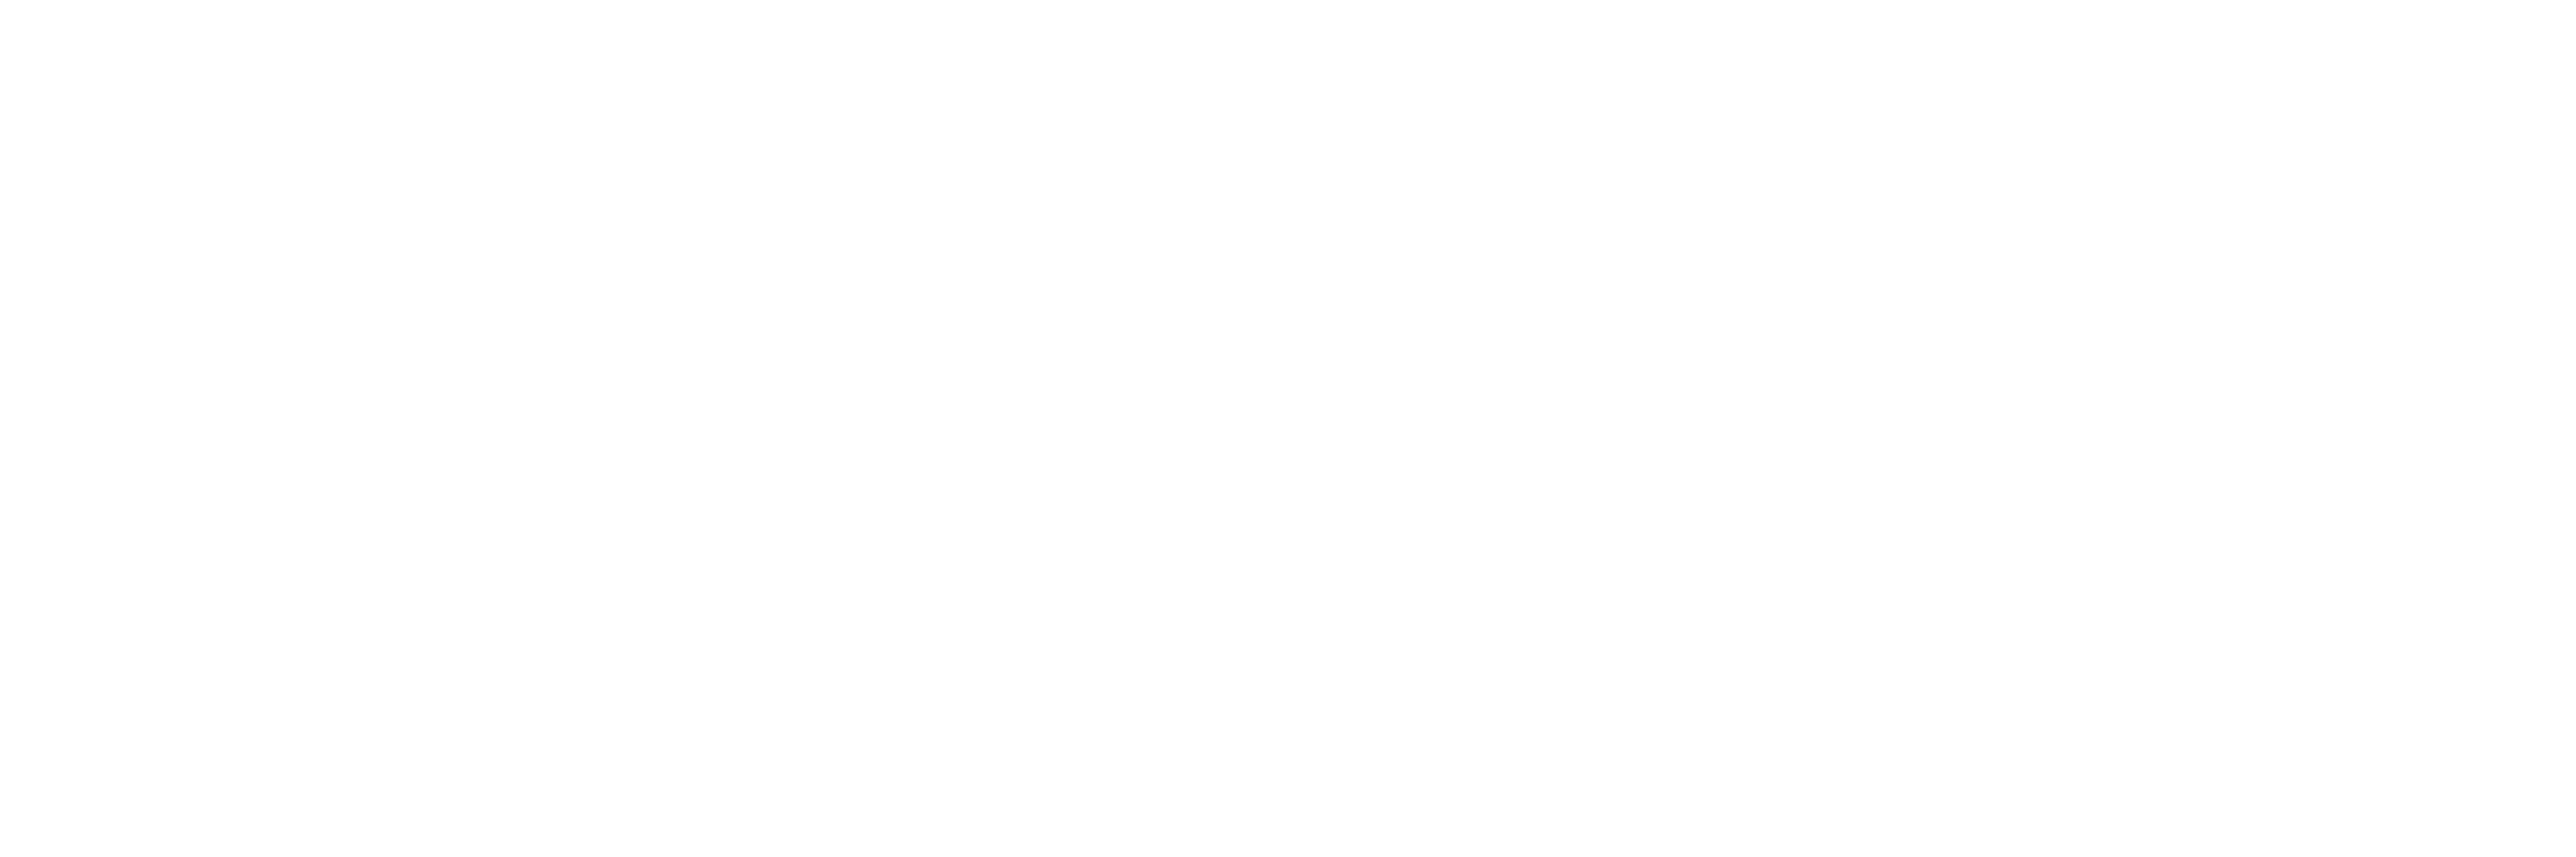 Newman University Birmingham Logo